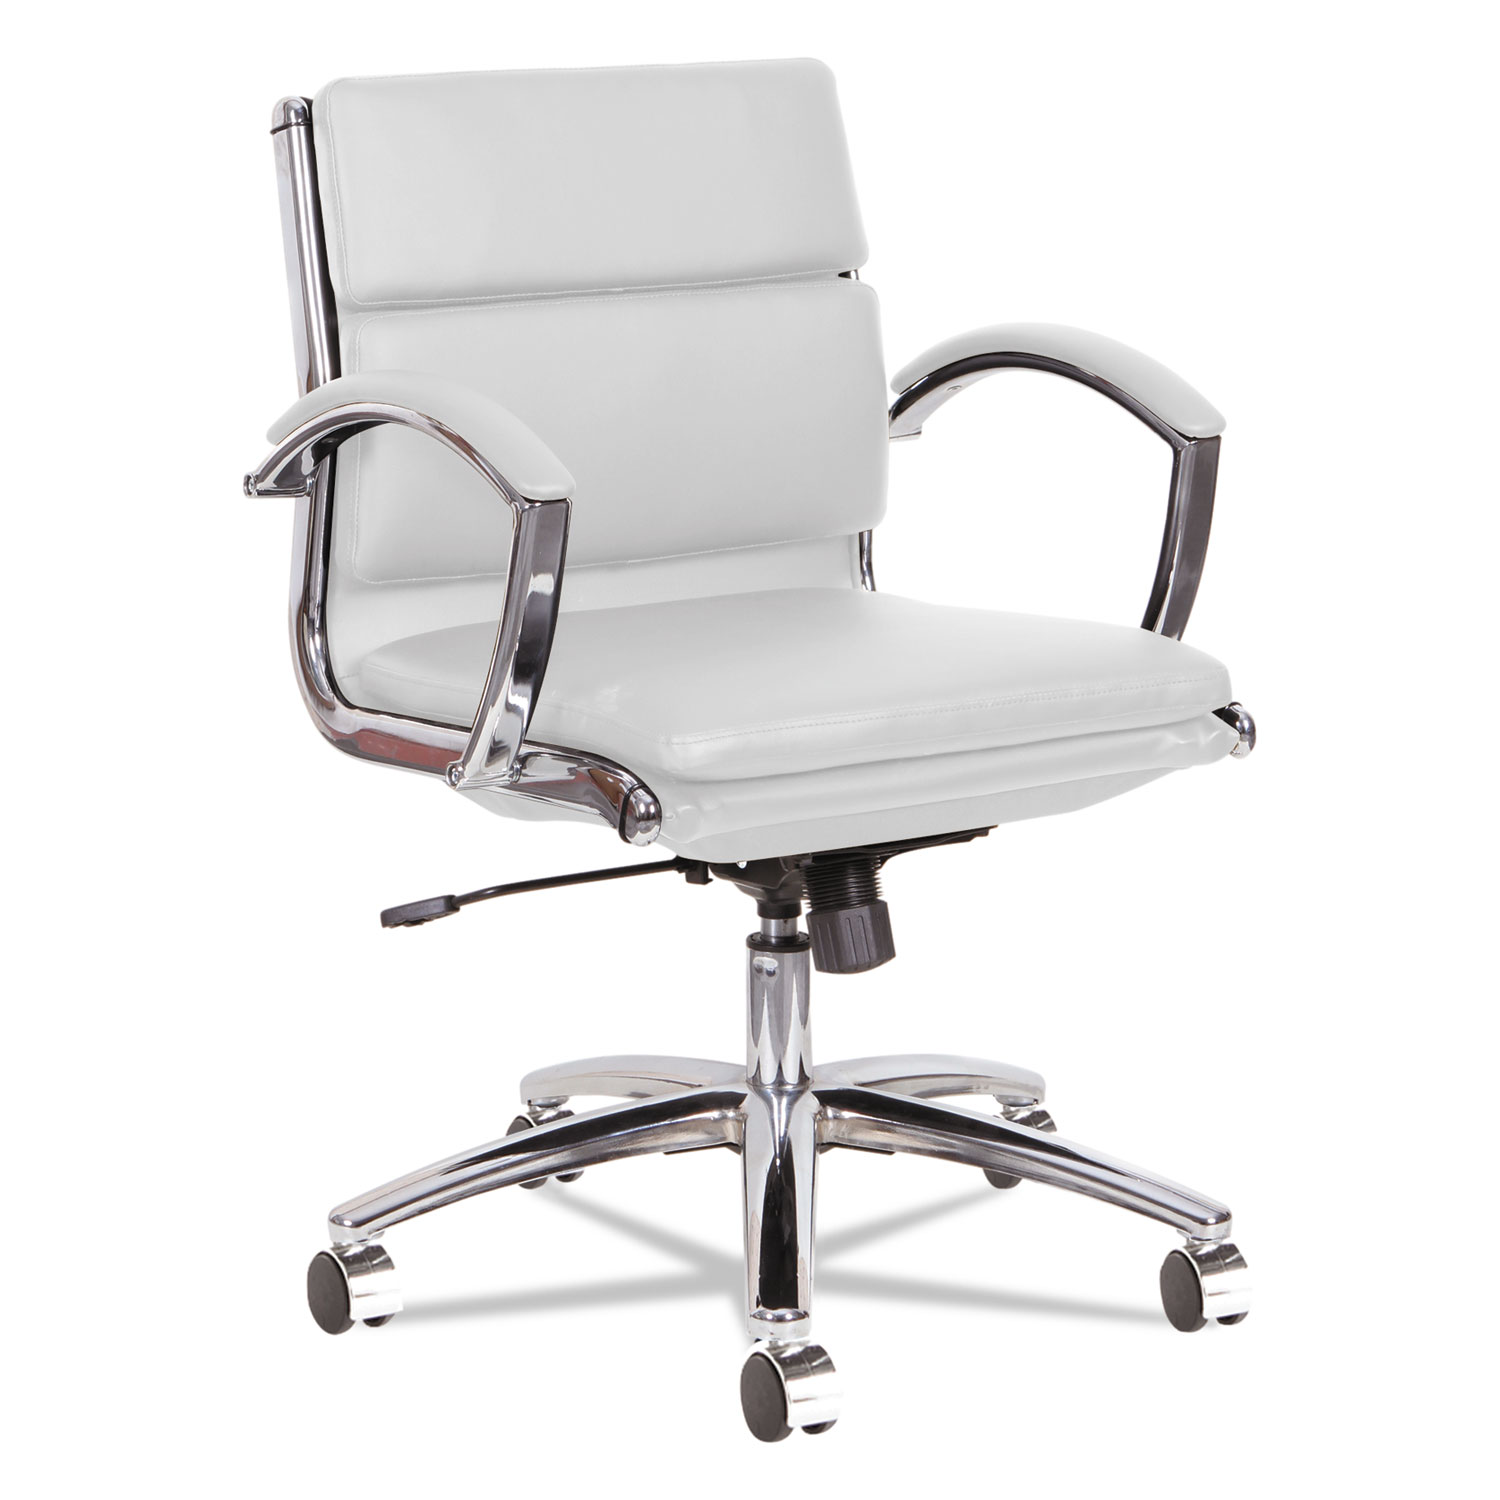  Alera ALENR4706 Alera Neratoli Low-Back Slim Profile Chair, Supports up to 275 lbs., White Seat/White Back, Chrome Base (ALENR4706) 